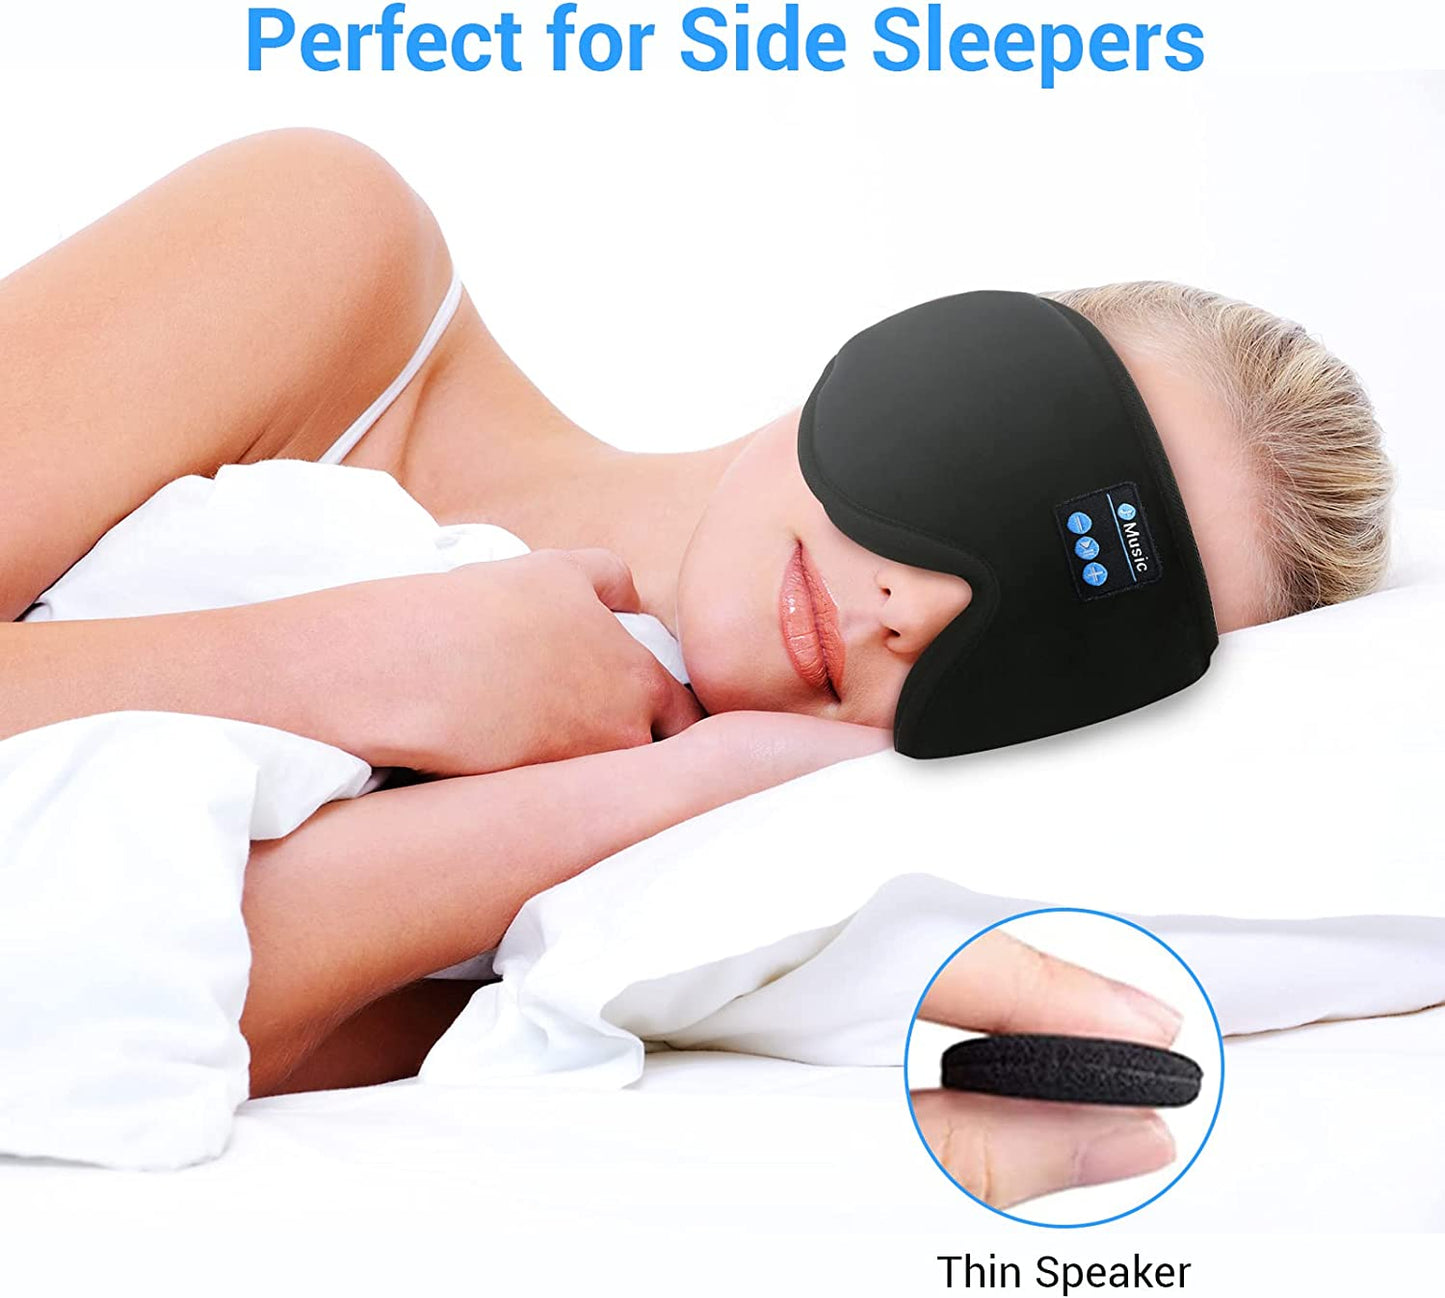 Bluetooth Sleep Eye Mask 3D Sleep Headphone with Headphones with Speakers and Microphone, Wireless Music Sleeping Eye Mask Washable Earbuds for Side Sleeper, Air Travel, Office Nap, Meditation